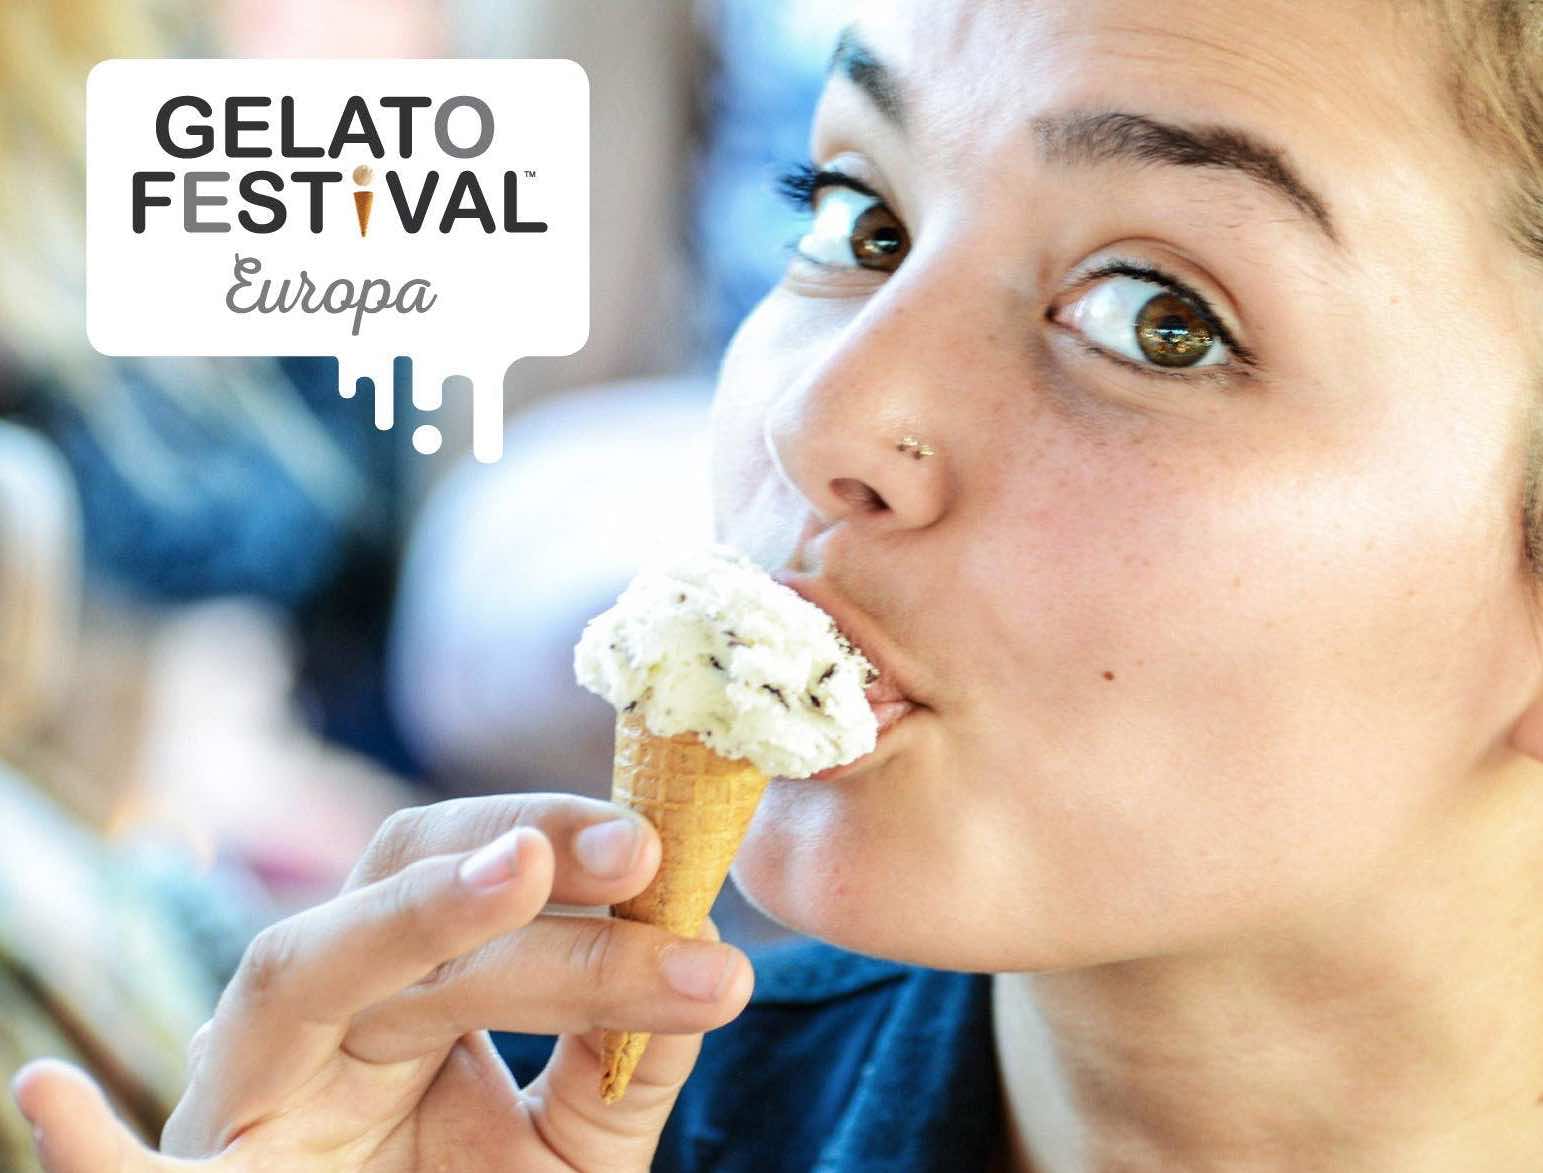 GG gelato festival 2019